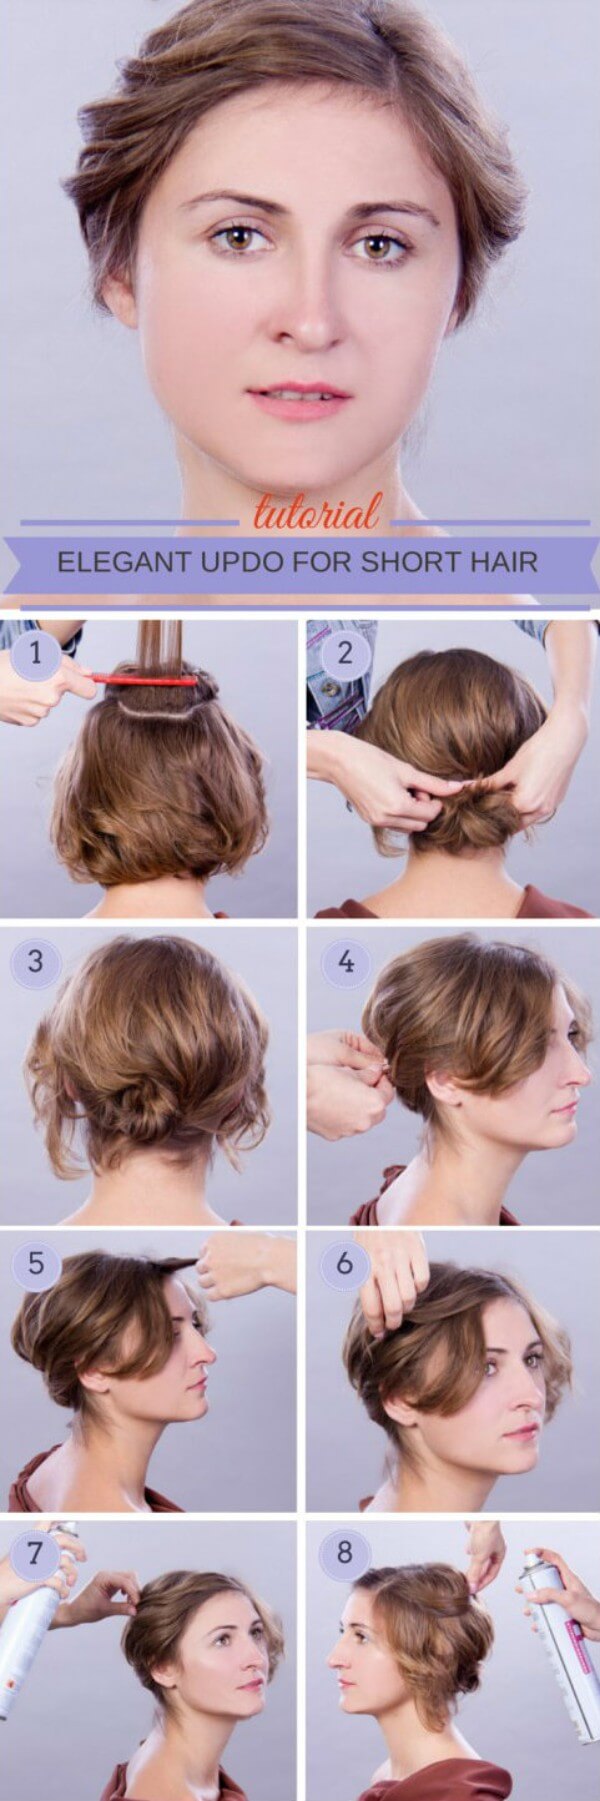 Short hair styling bun 3 tutorial - K4 Fashion